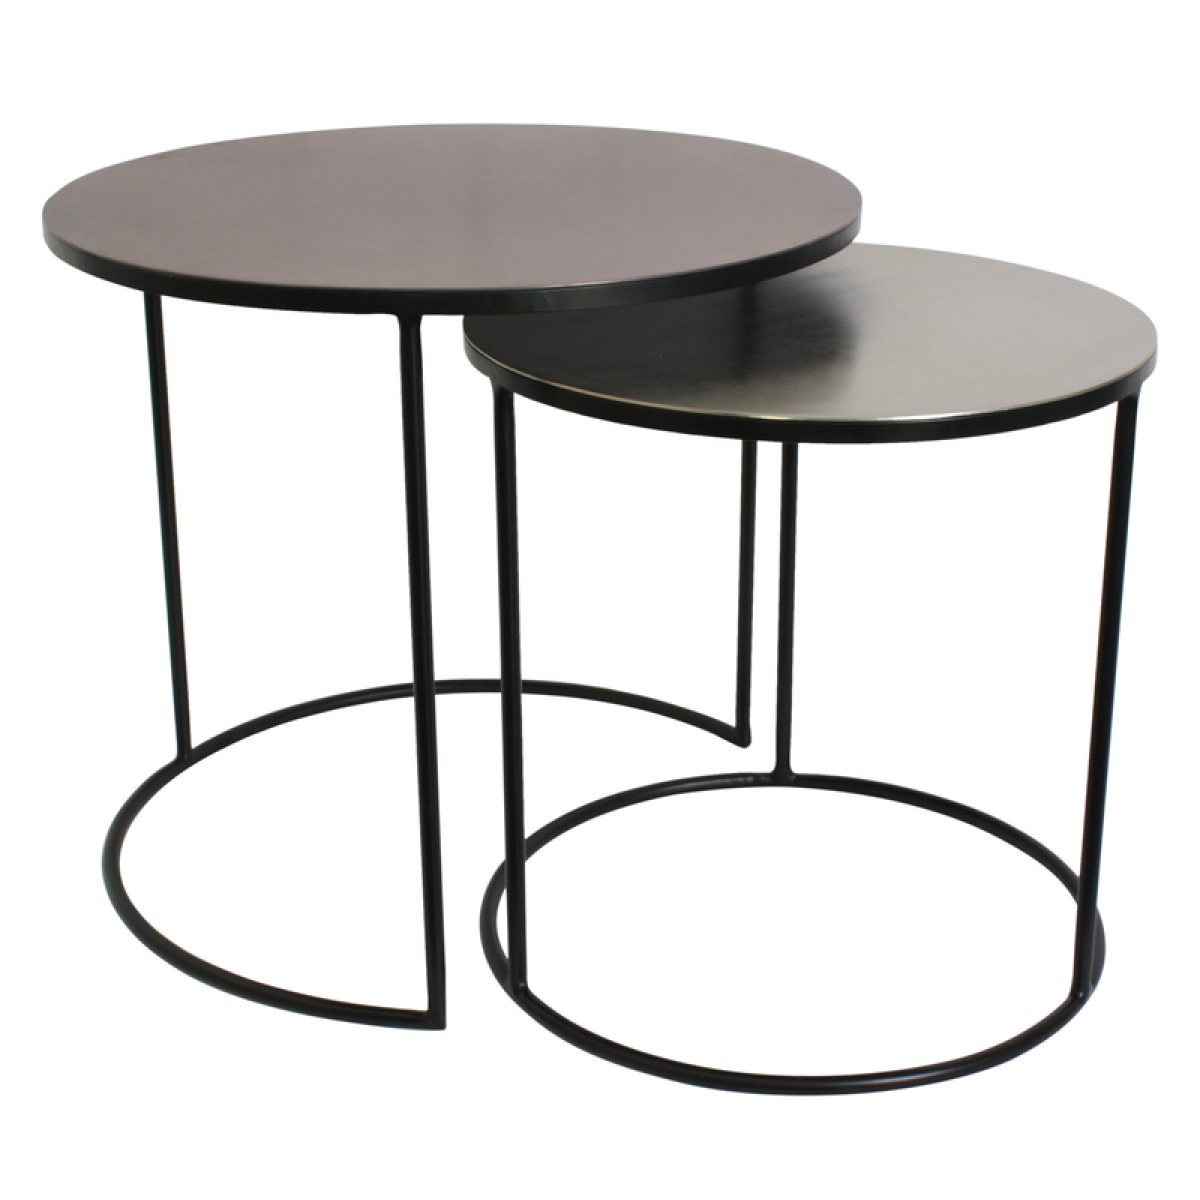 Bodilson Coffee Table Set Twins Boc 14000018 De Troubadour Interieurs in sizing 1200 X 1200